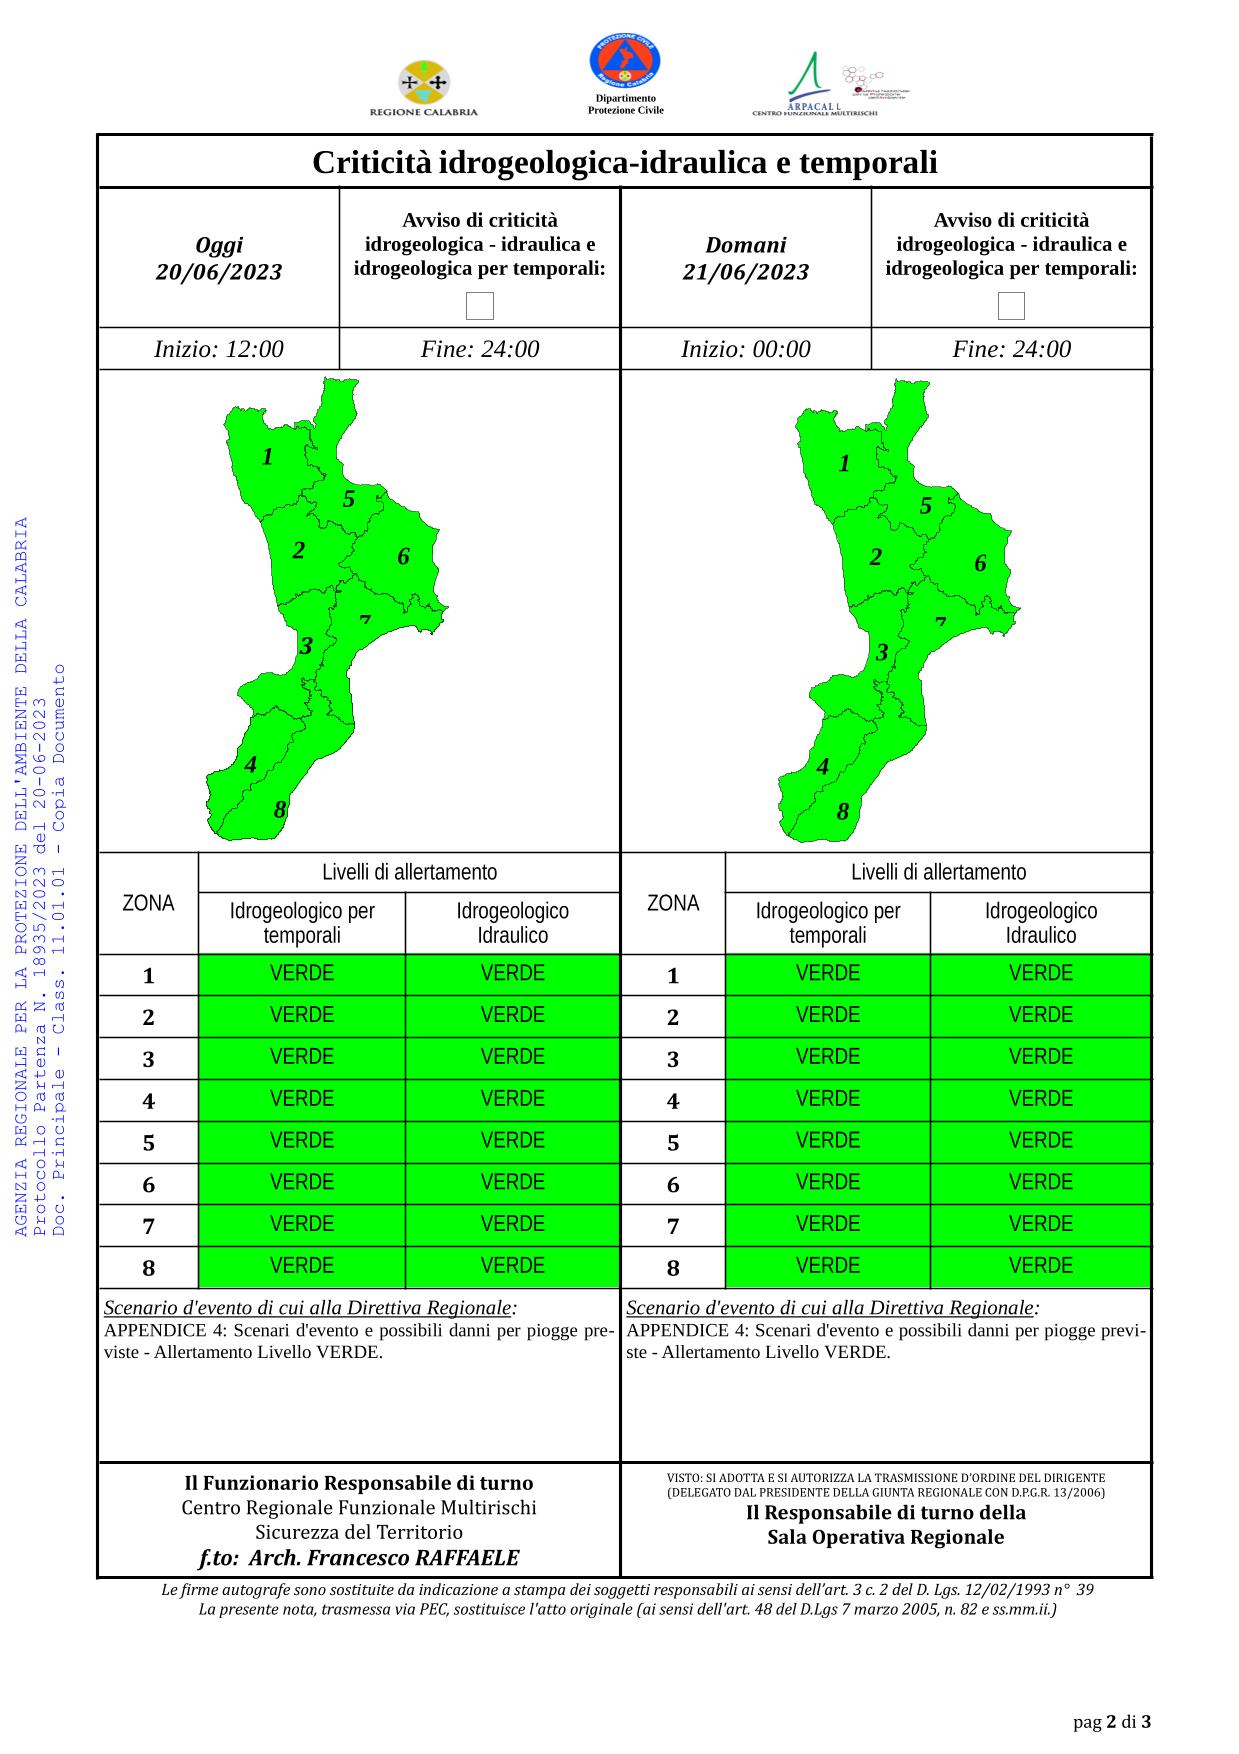 Criticità idrogeologica-idraulica e temporali in Calabria 20-06-2023